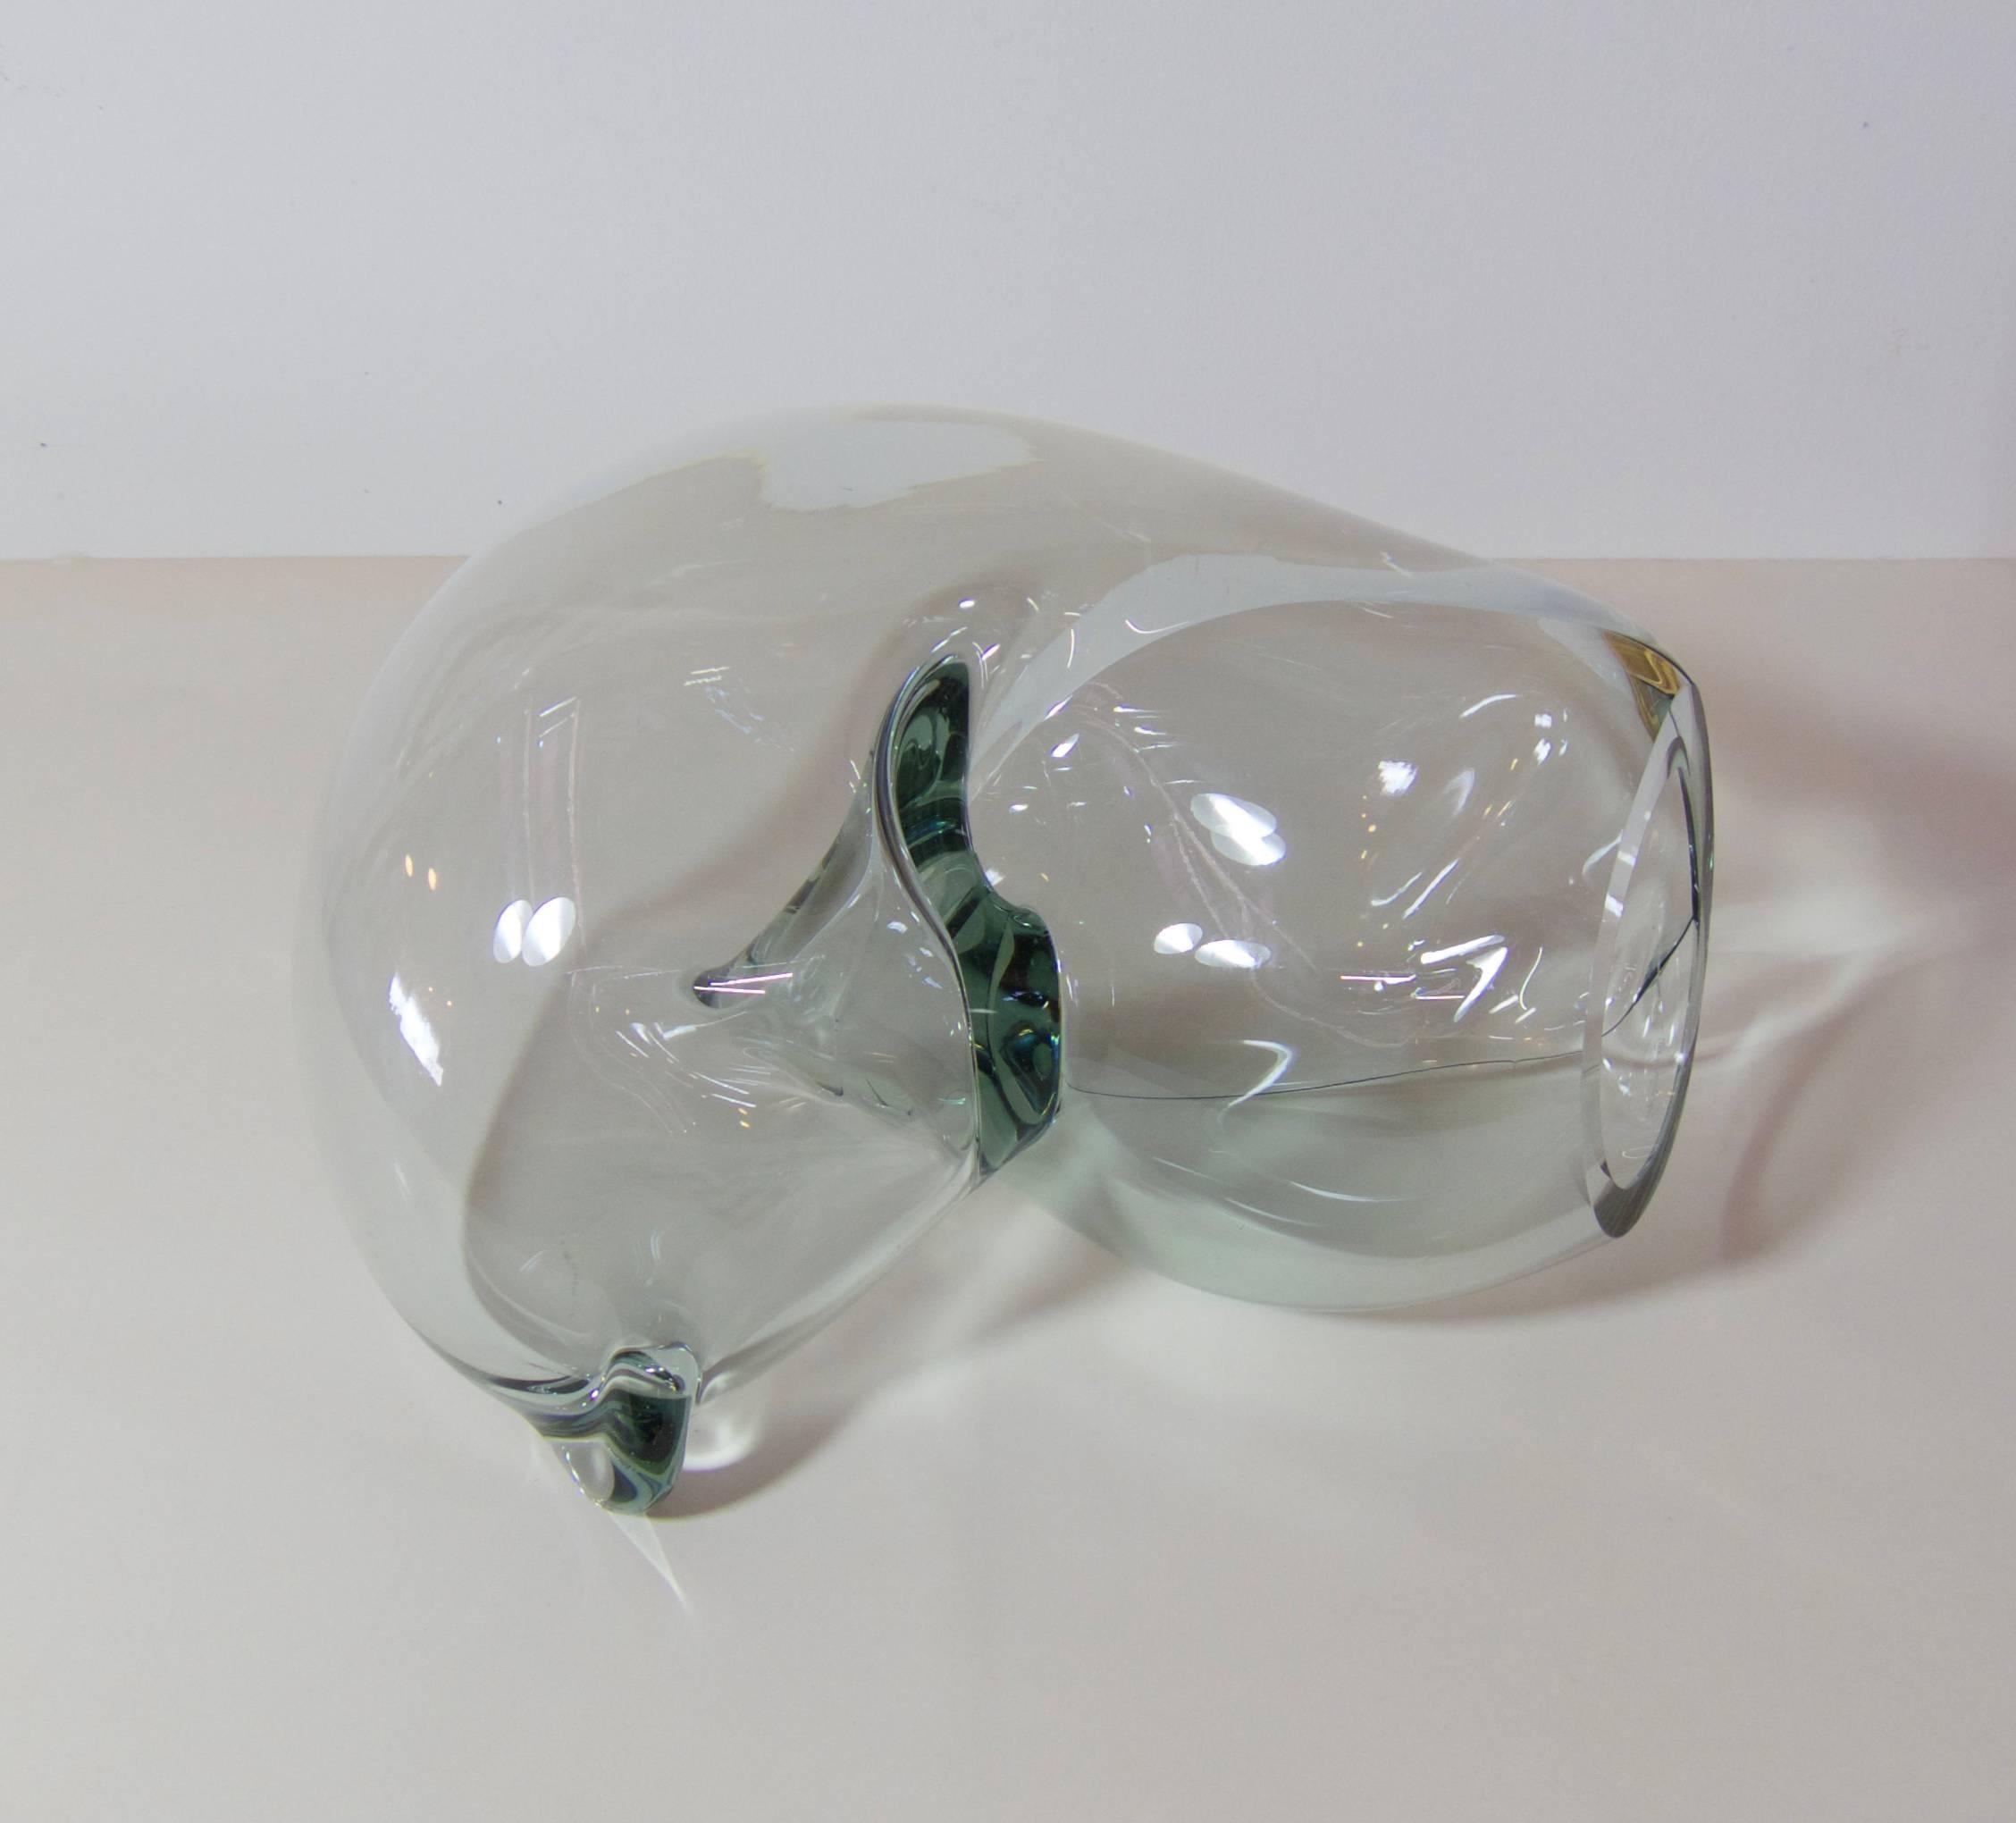 Biomorphic glass sculpture - Sculpture by John Bingham